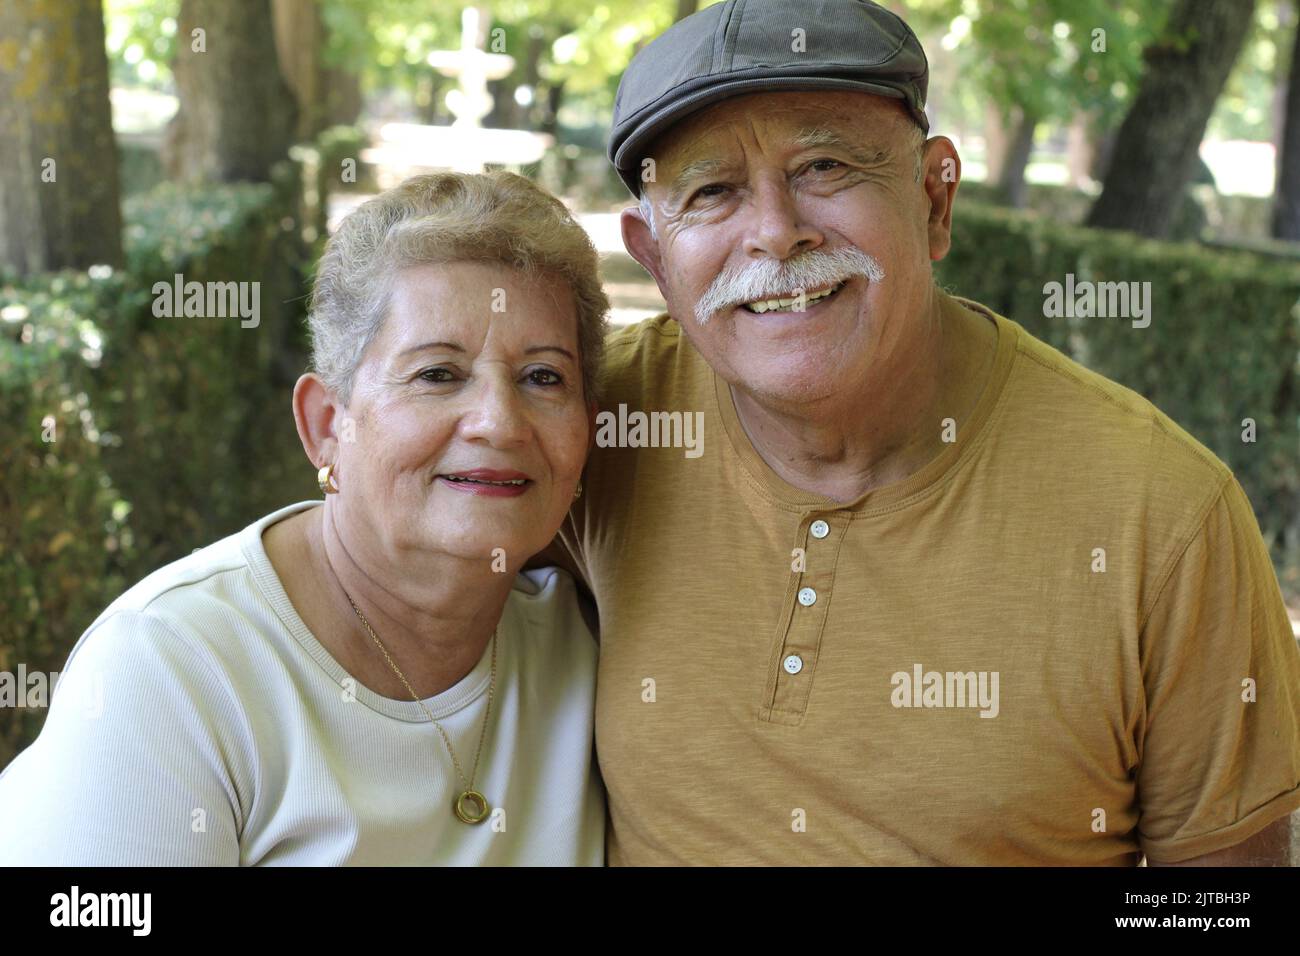 Senior citizens falling in love Stock Photo